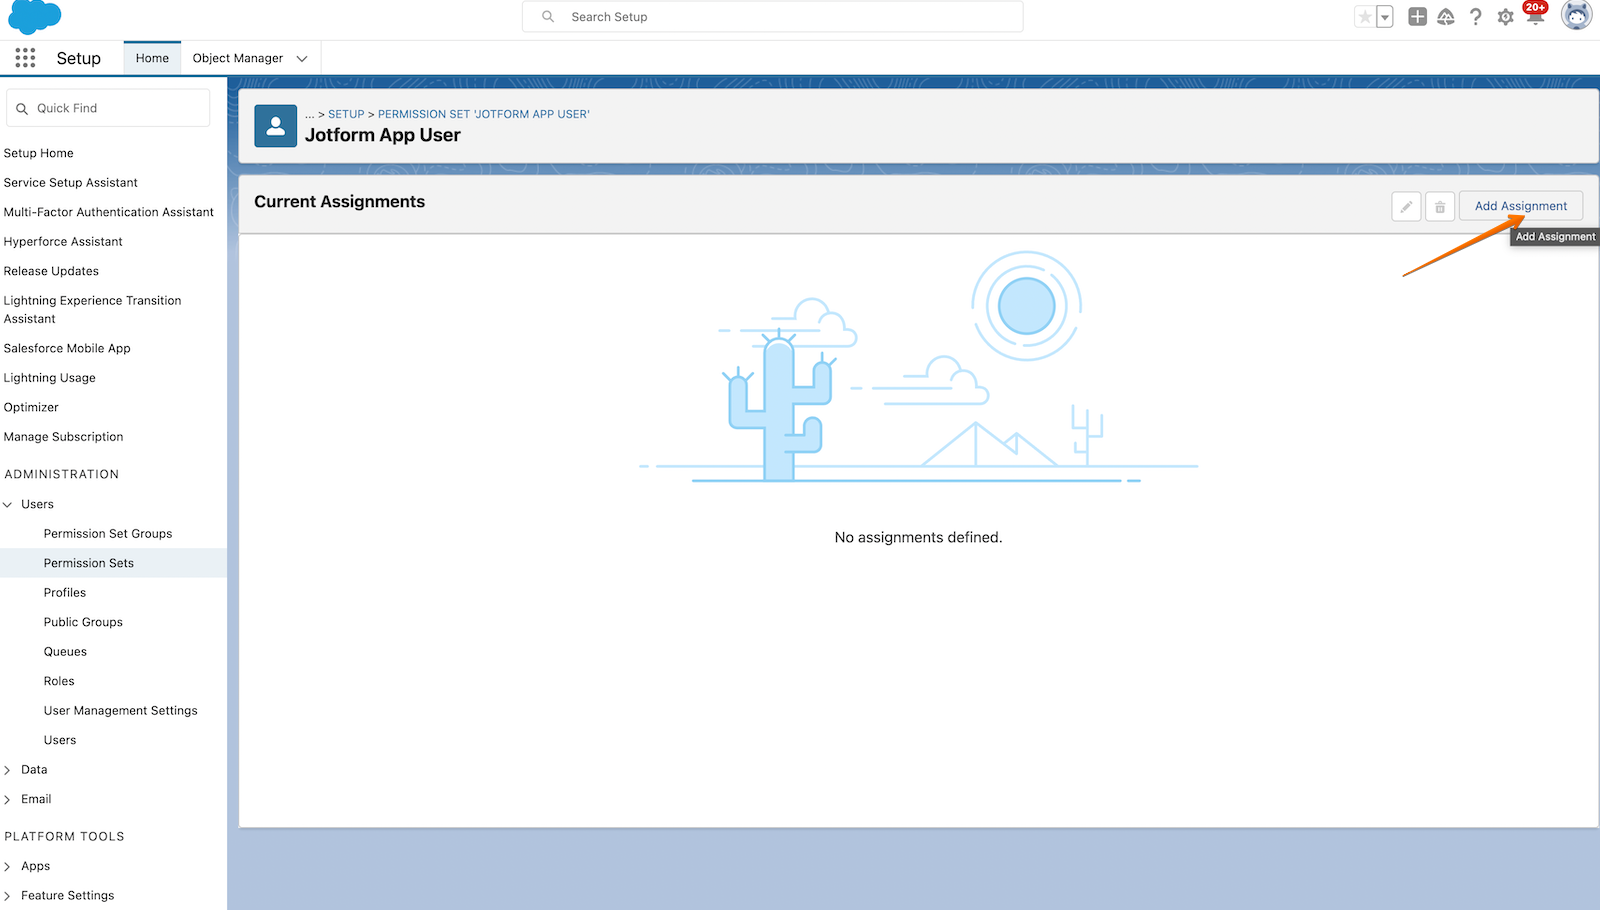 Integrate Jotform with Salesforce Sandbox account Image 5 Screenshot 214 Screenshot 54 Screenshot 54 Screenshot 54